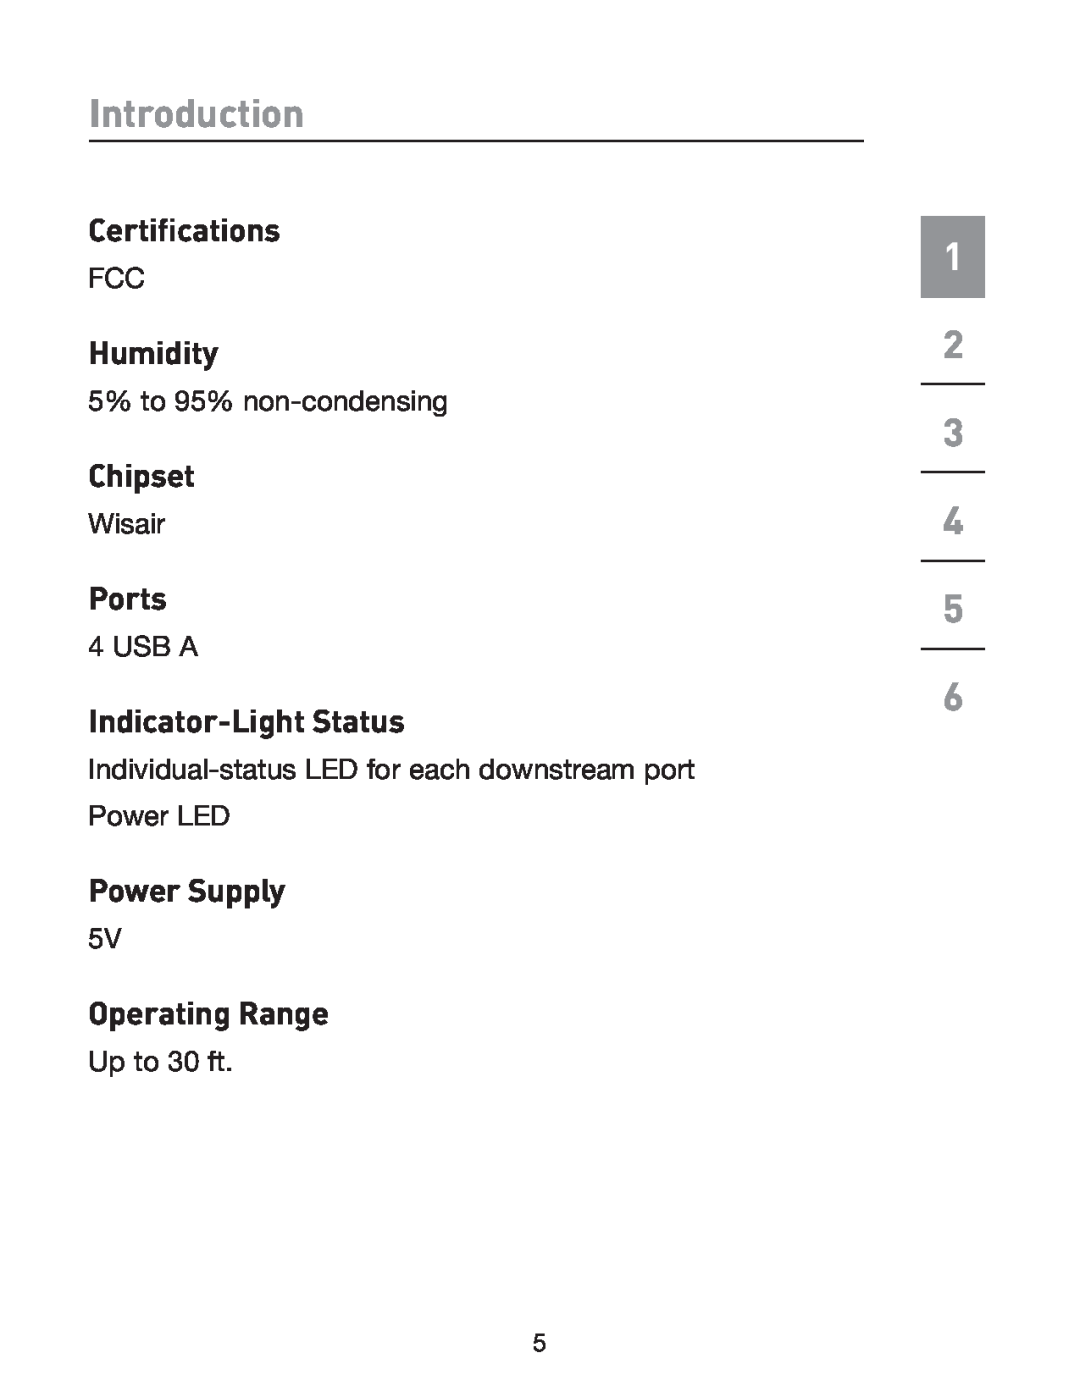 Belkin F5U301 Certiﬁcations, Humidity, Chipset, Ports, Indicator-Light Status, Power Supply, Operating Range, Introduction 